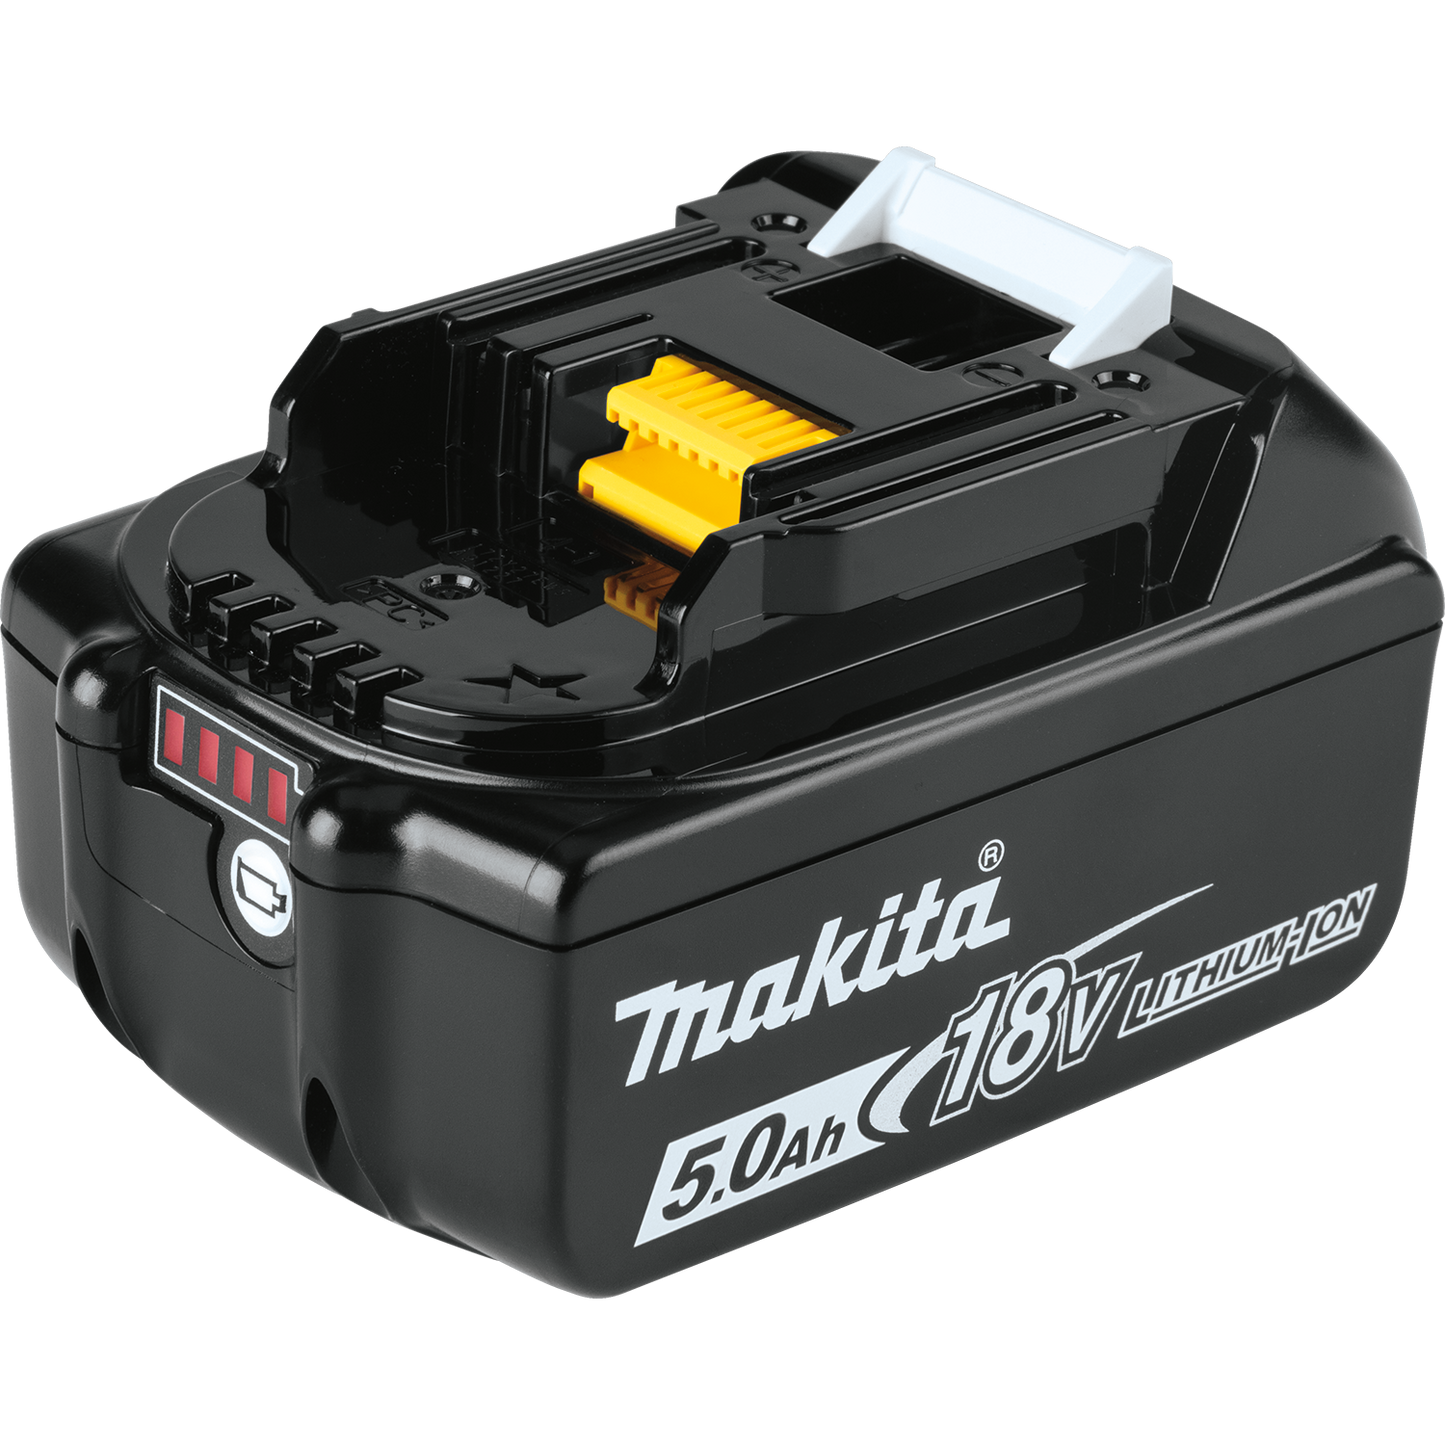 Makita 36 Volt LXT 17 Inch Lawn Mower Kit (5.0Ah) Factory Serviced